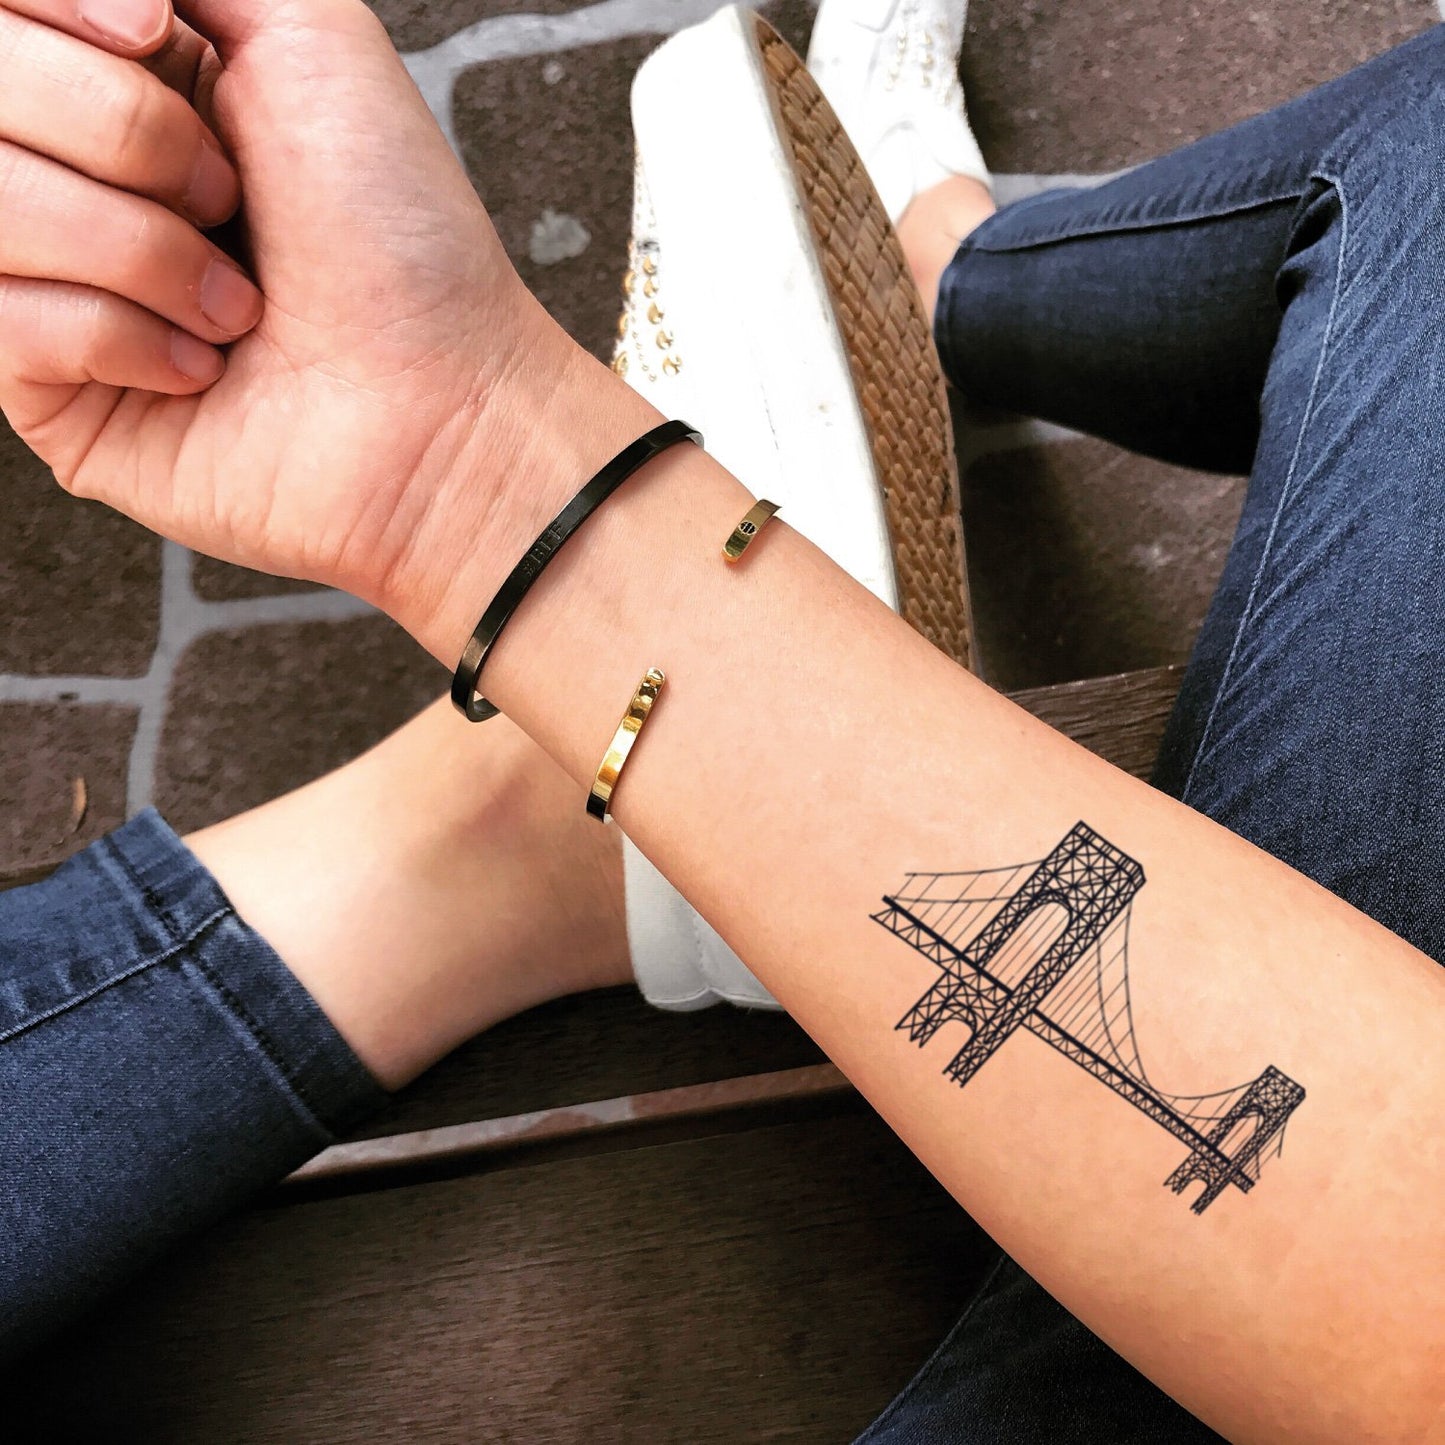 fake small golden gate bay bridge illustrative temporary tattoo sticker design idea on forearm